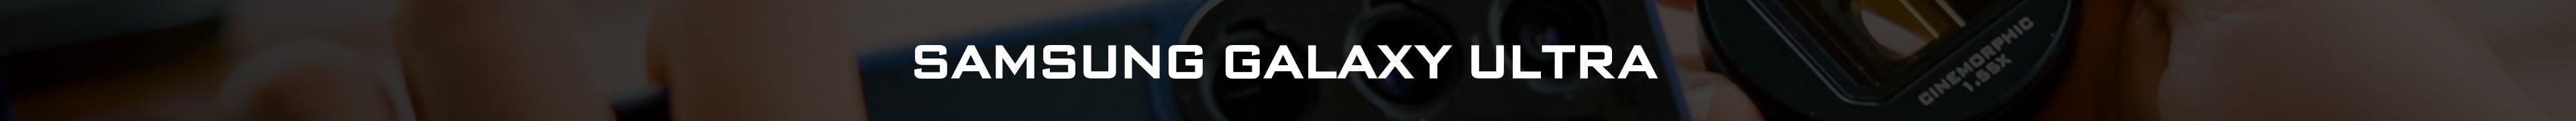 Kit d'objectifs Samsung Galaxy Ultra : ND, CPL, Anamorphique et plus